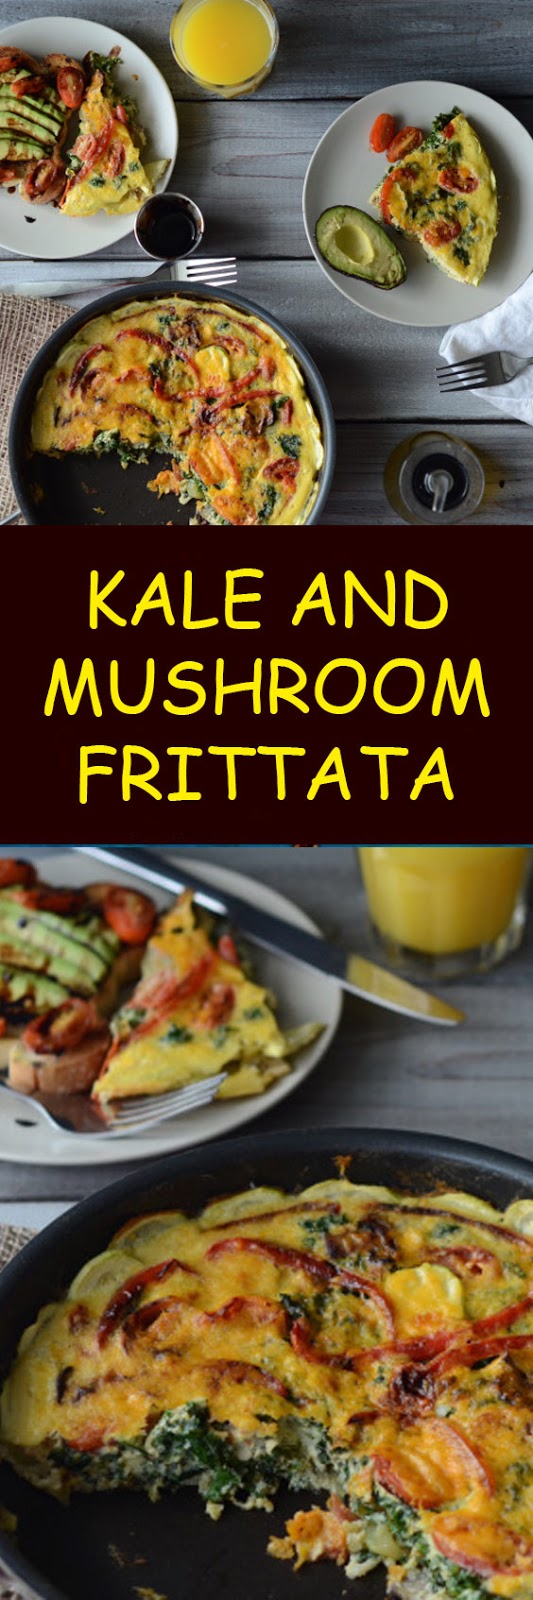 Kale and Mushroom Frittata